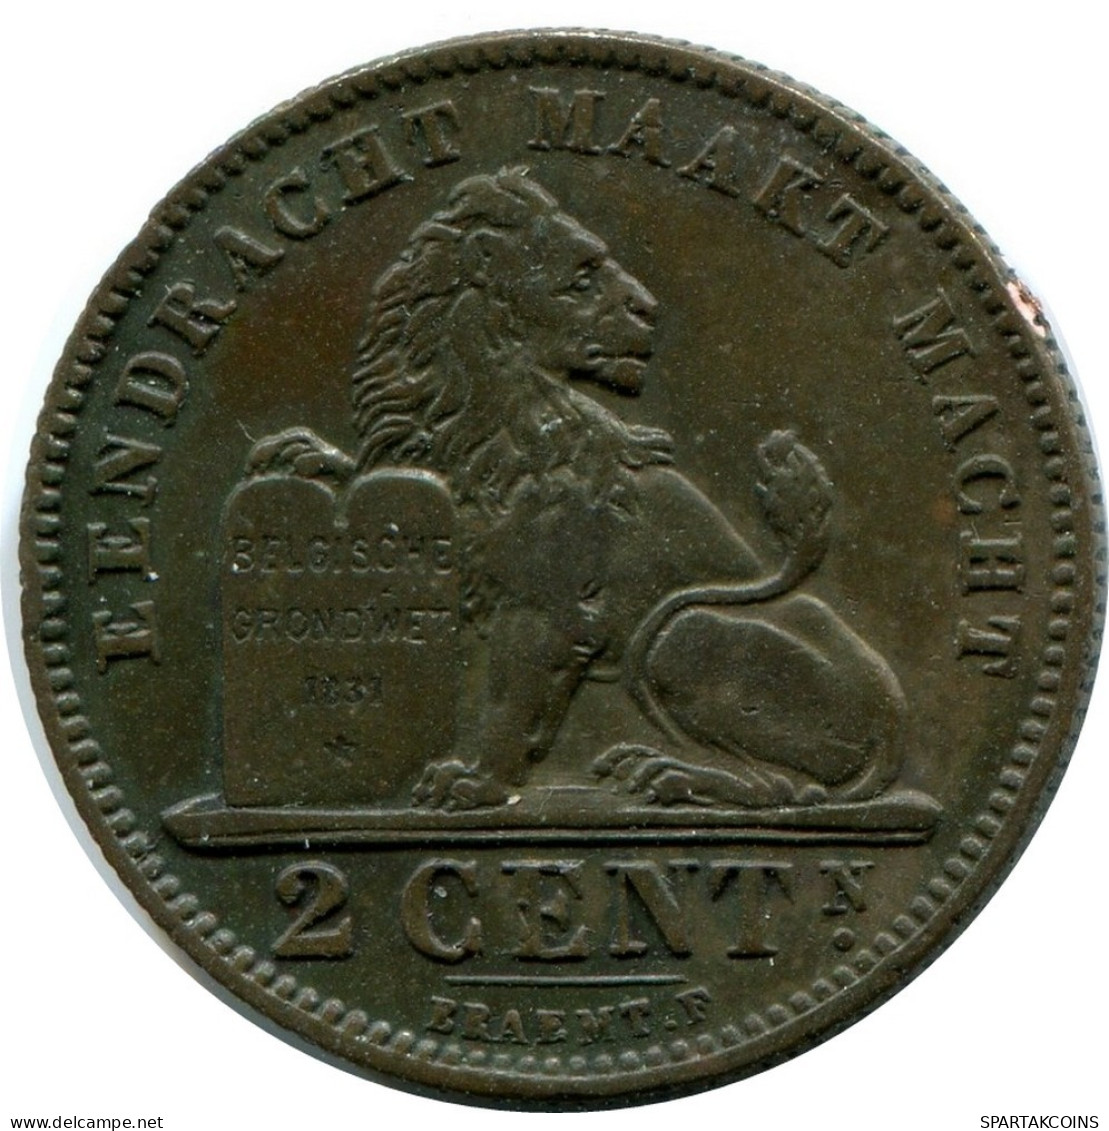 2 CENTIMES 1911 BELGIUM Coin DUTCH Text #AX361.U.A - 2 Centimes